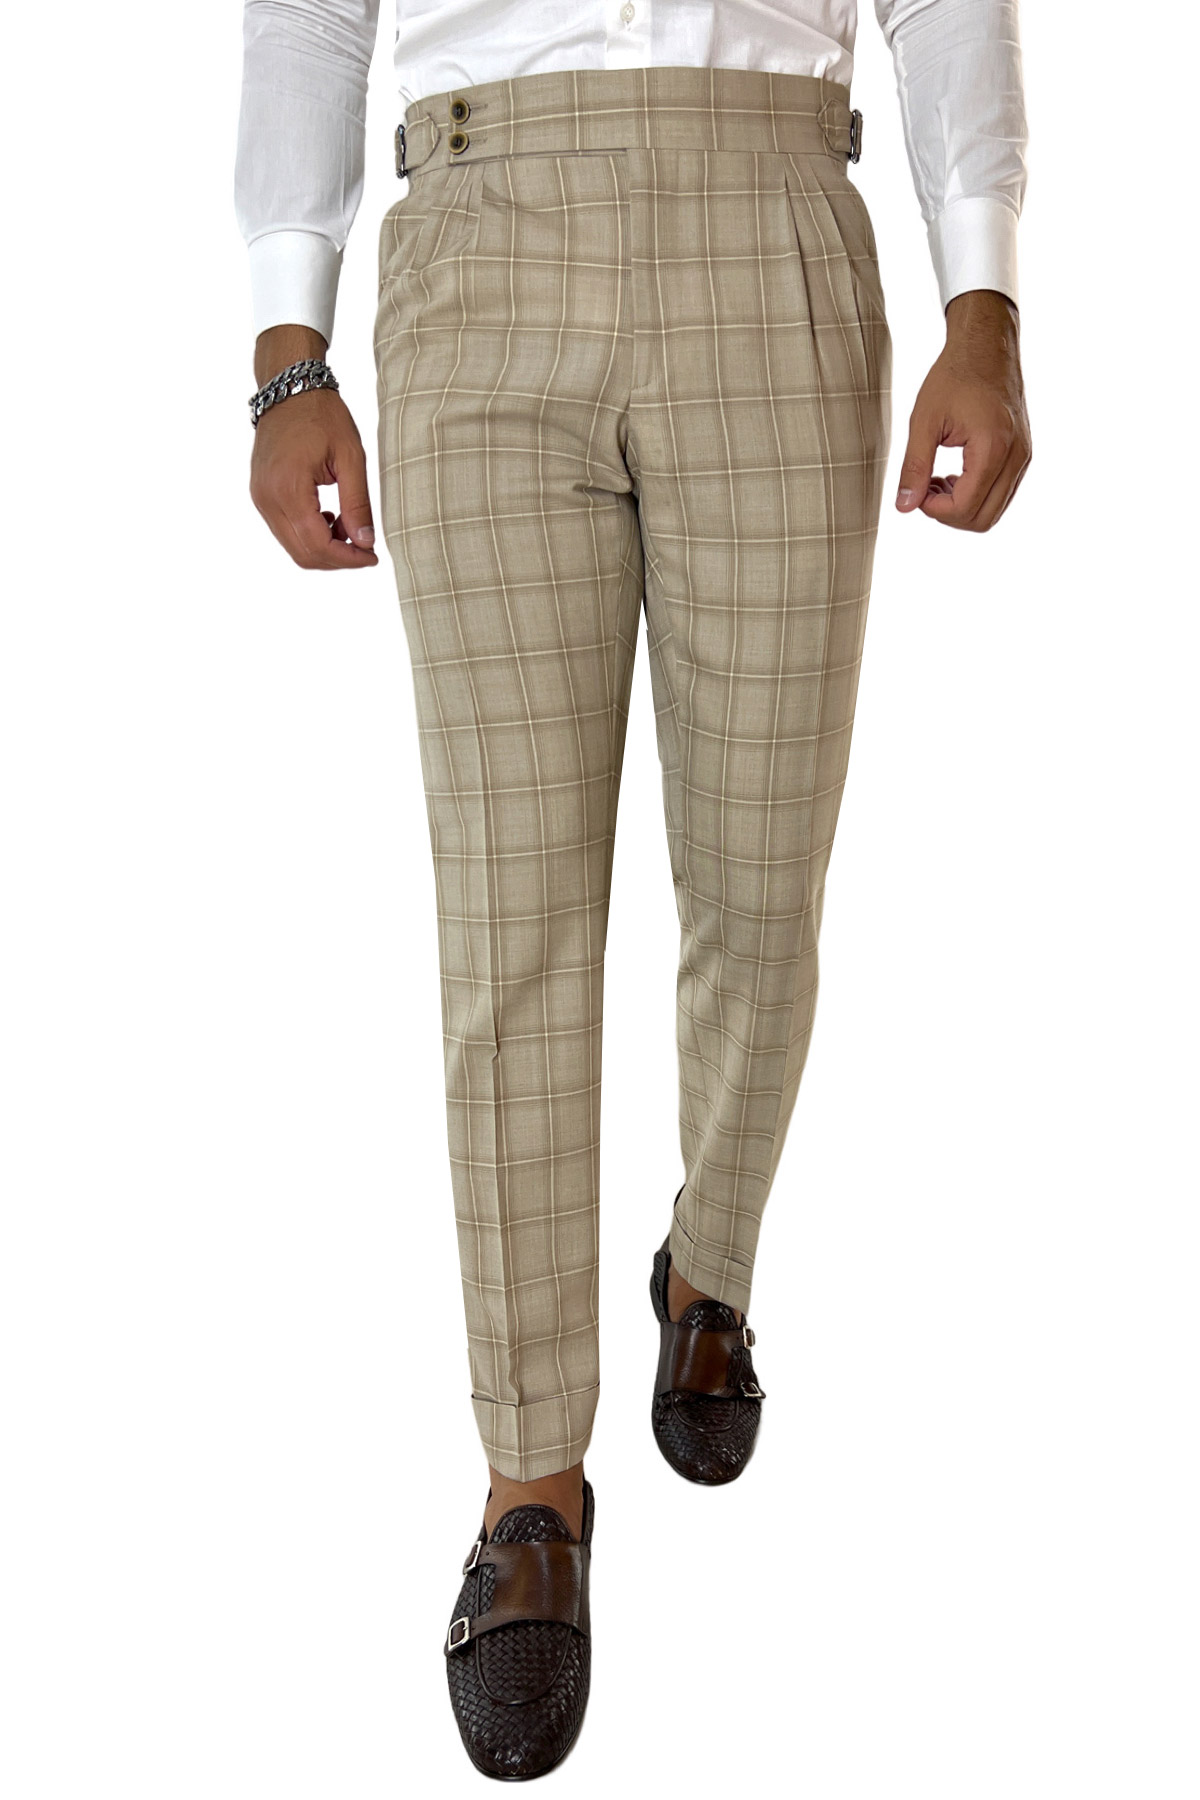 Pantalone uomo beige a quadri vita alta doppia pinces in fresco lana super 120's Holland & Sherry